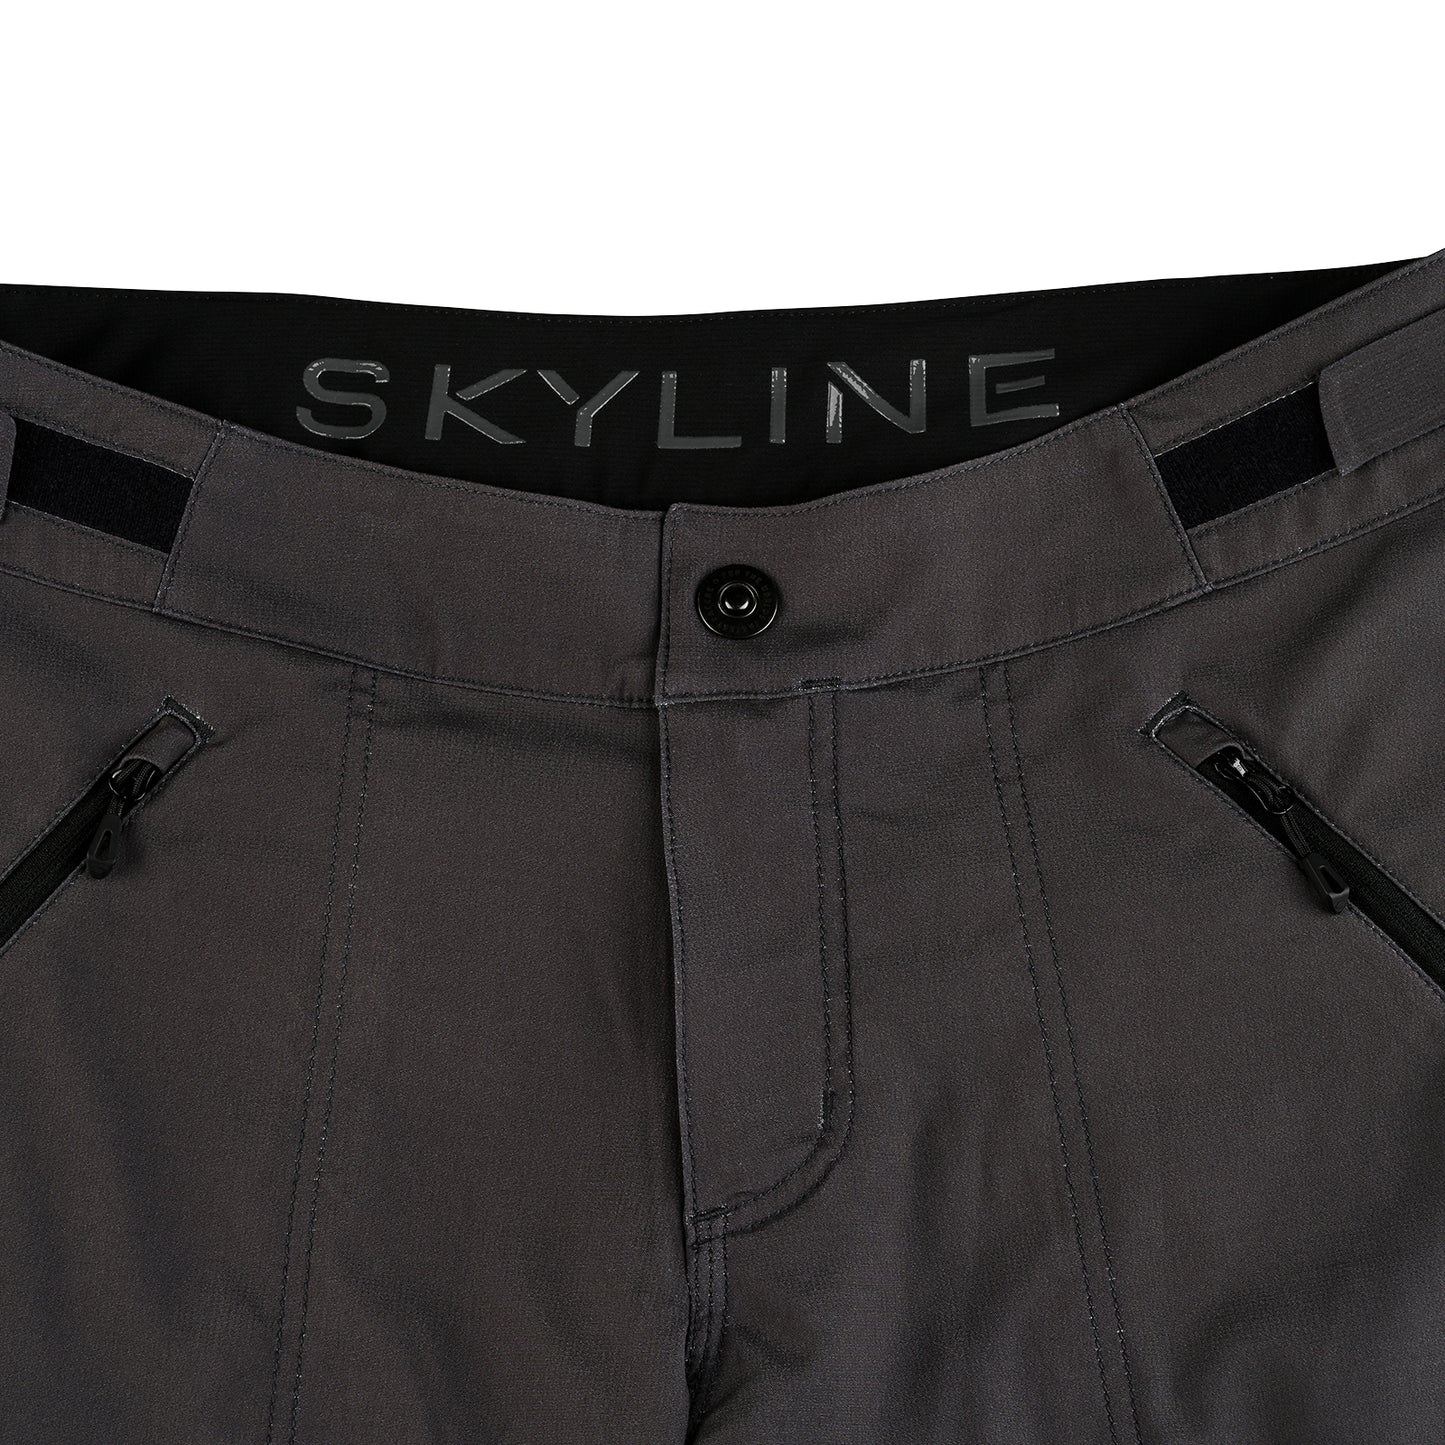 Skyline Short W/Liner Mono Charcoal